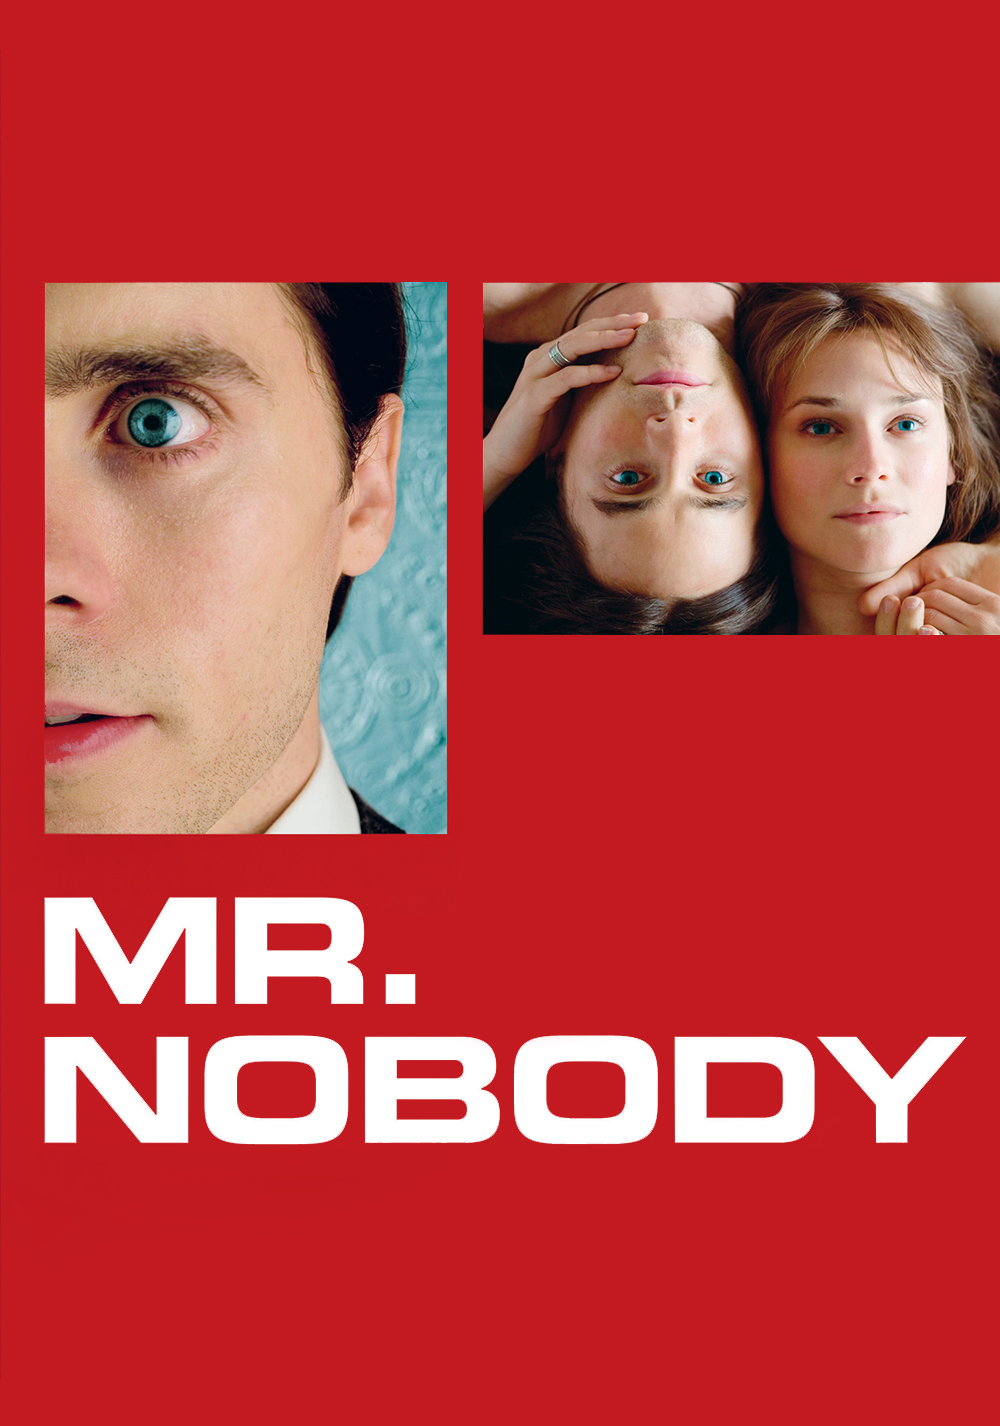 Mr. Nobody Picture